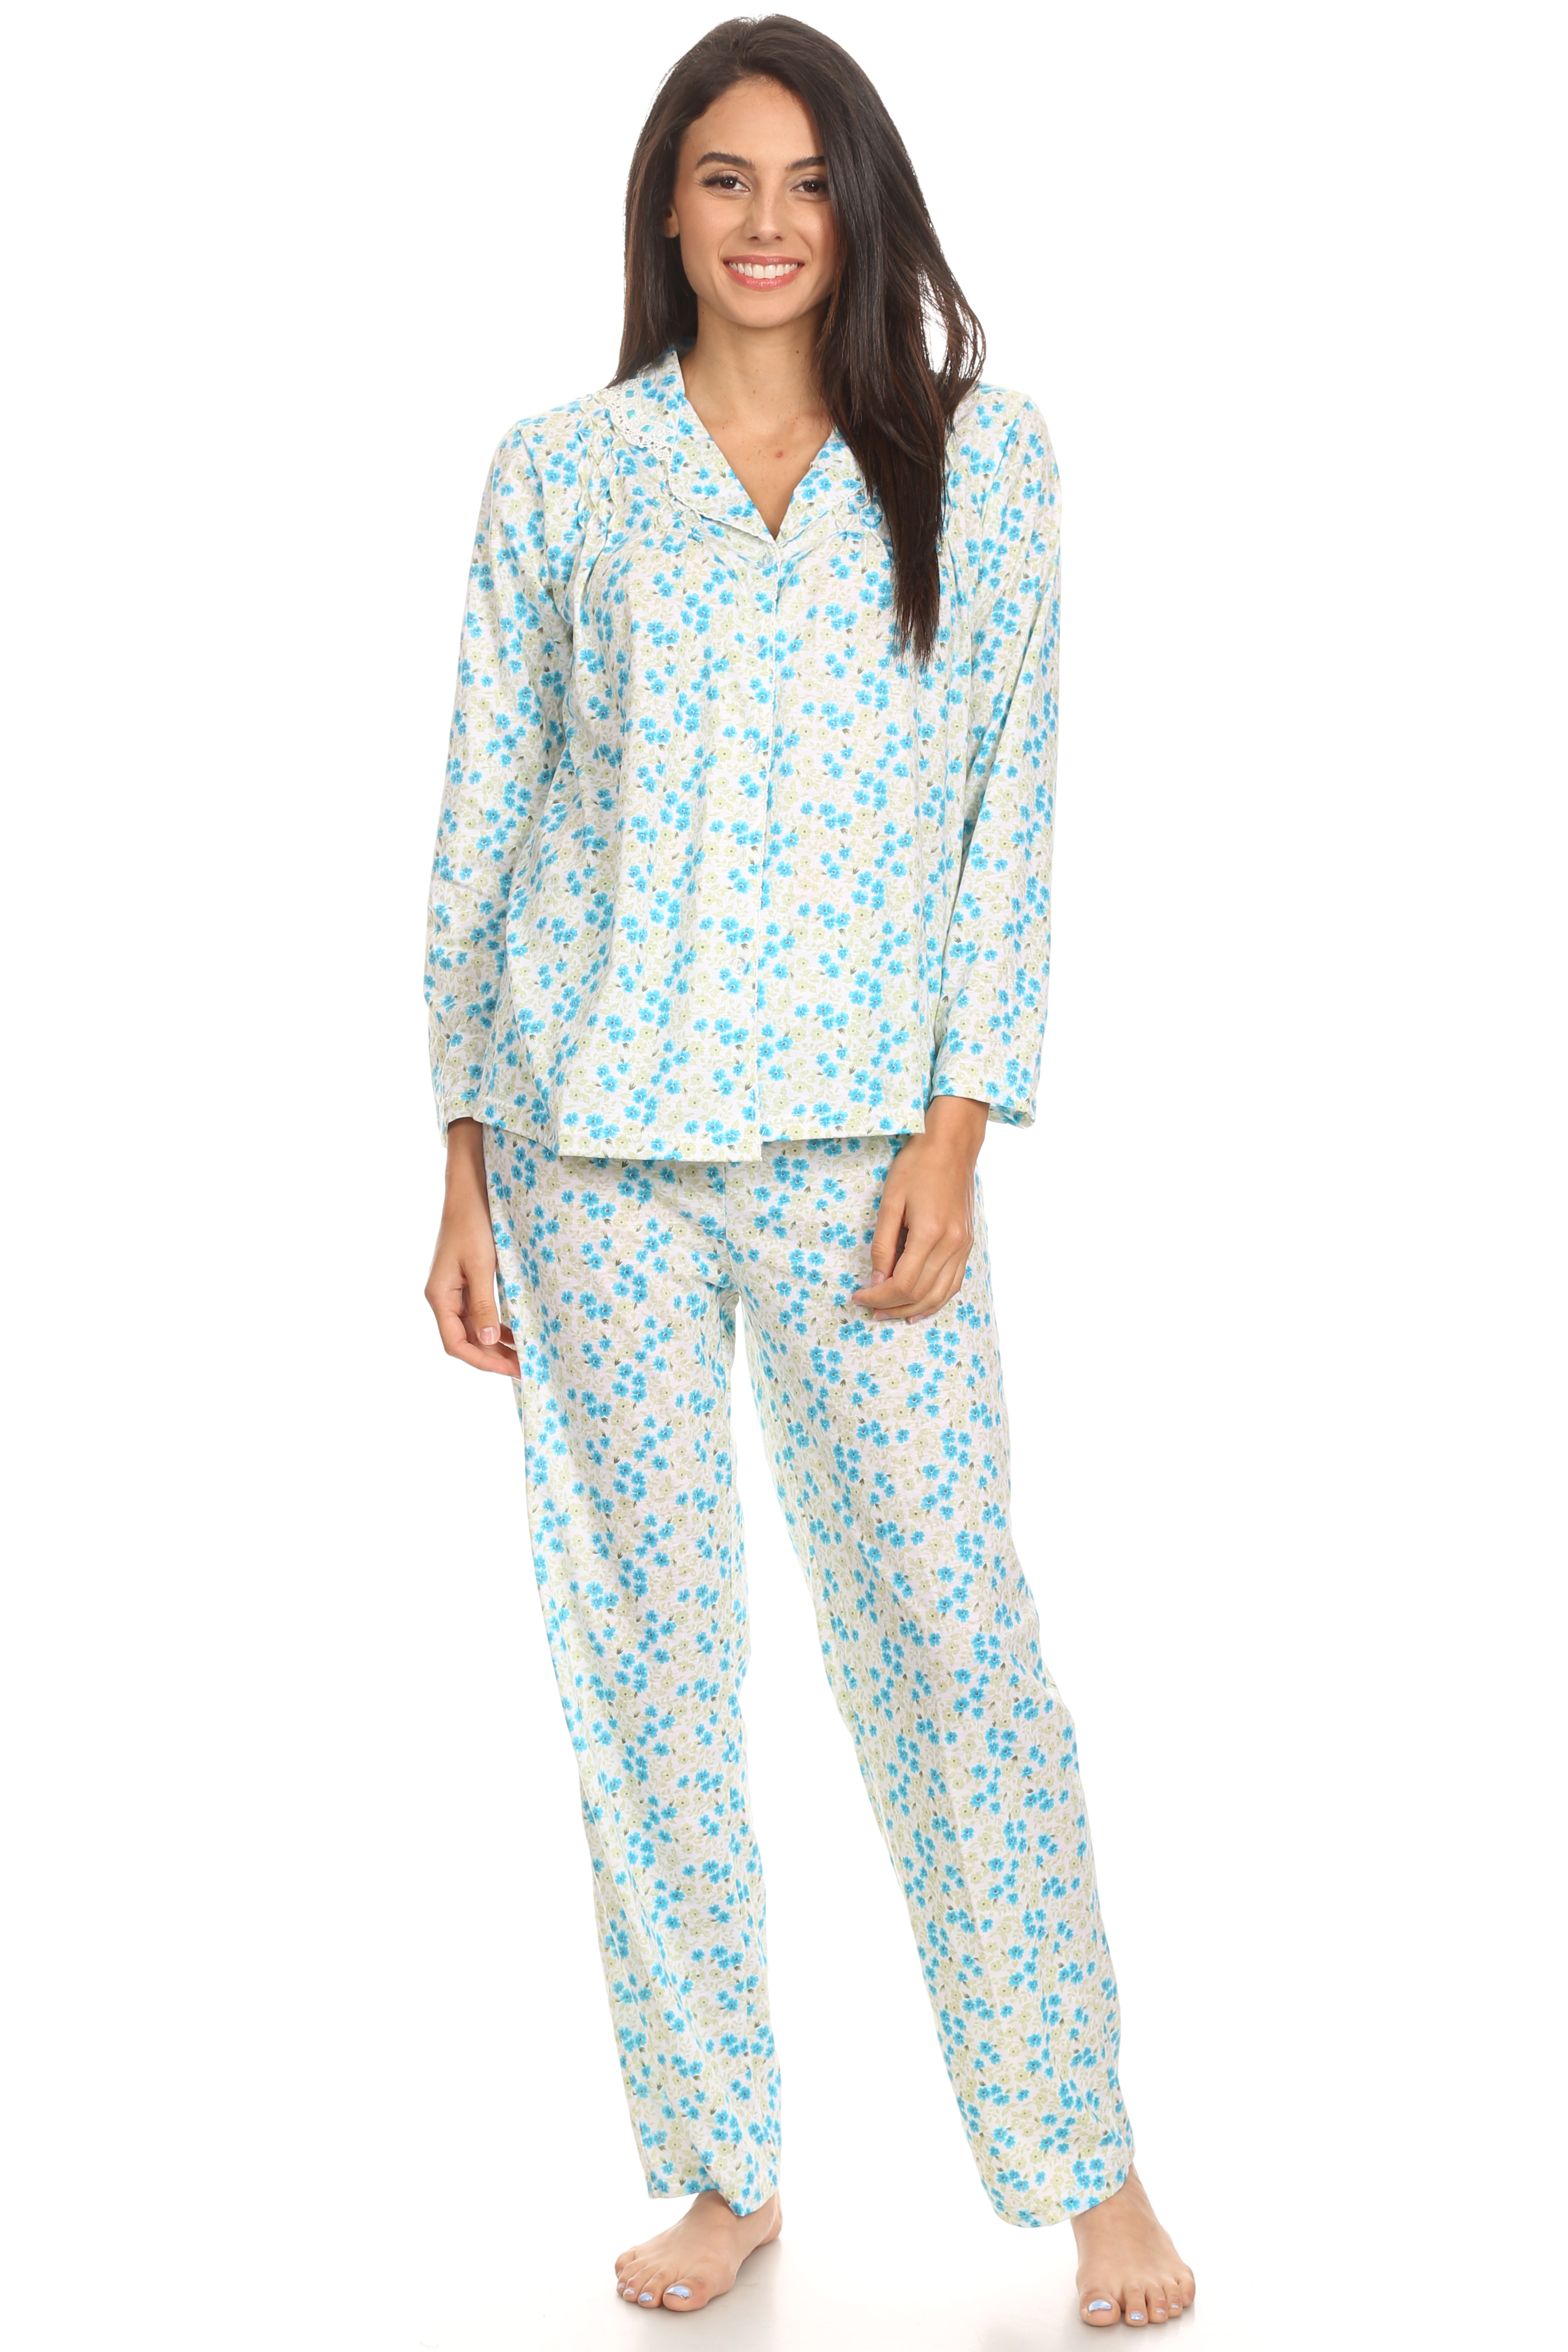 Size 4X Women's Pajamas & Robes - Sears